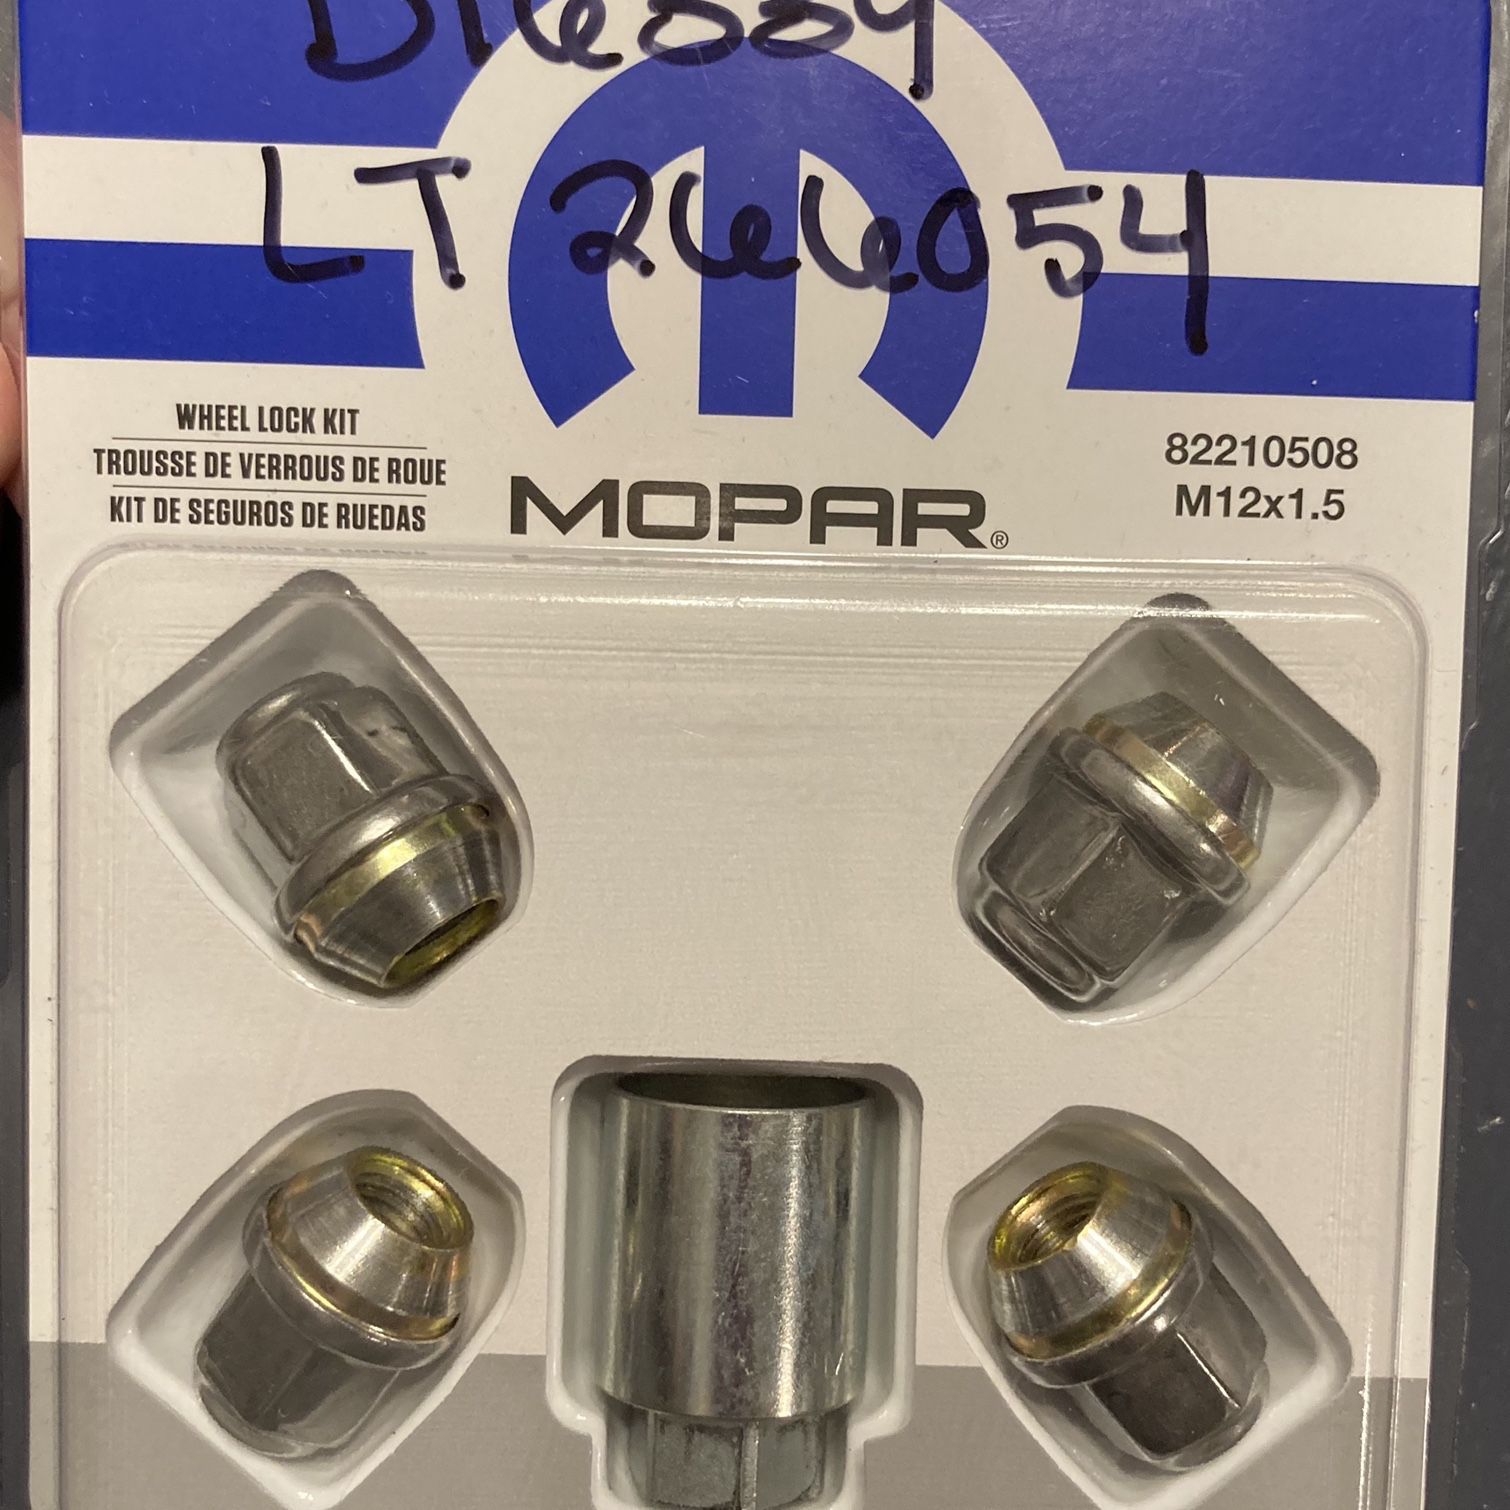 New DODGE Part #82210508 M12x1.5 Set Of 4 Wheel Locks / Locking Lug Nuts With Key - Mopar Official Factory Part!!